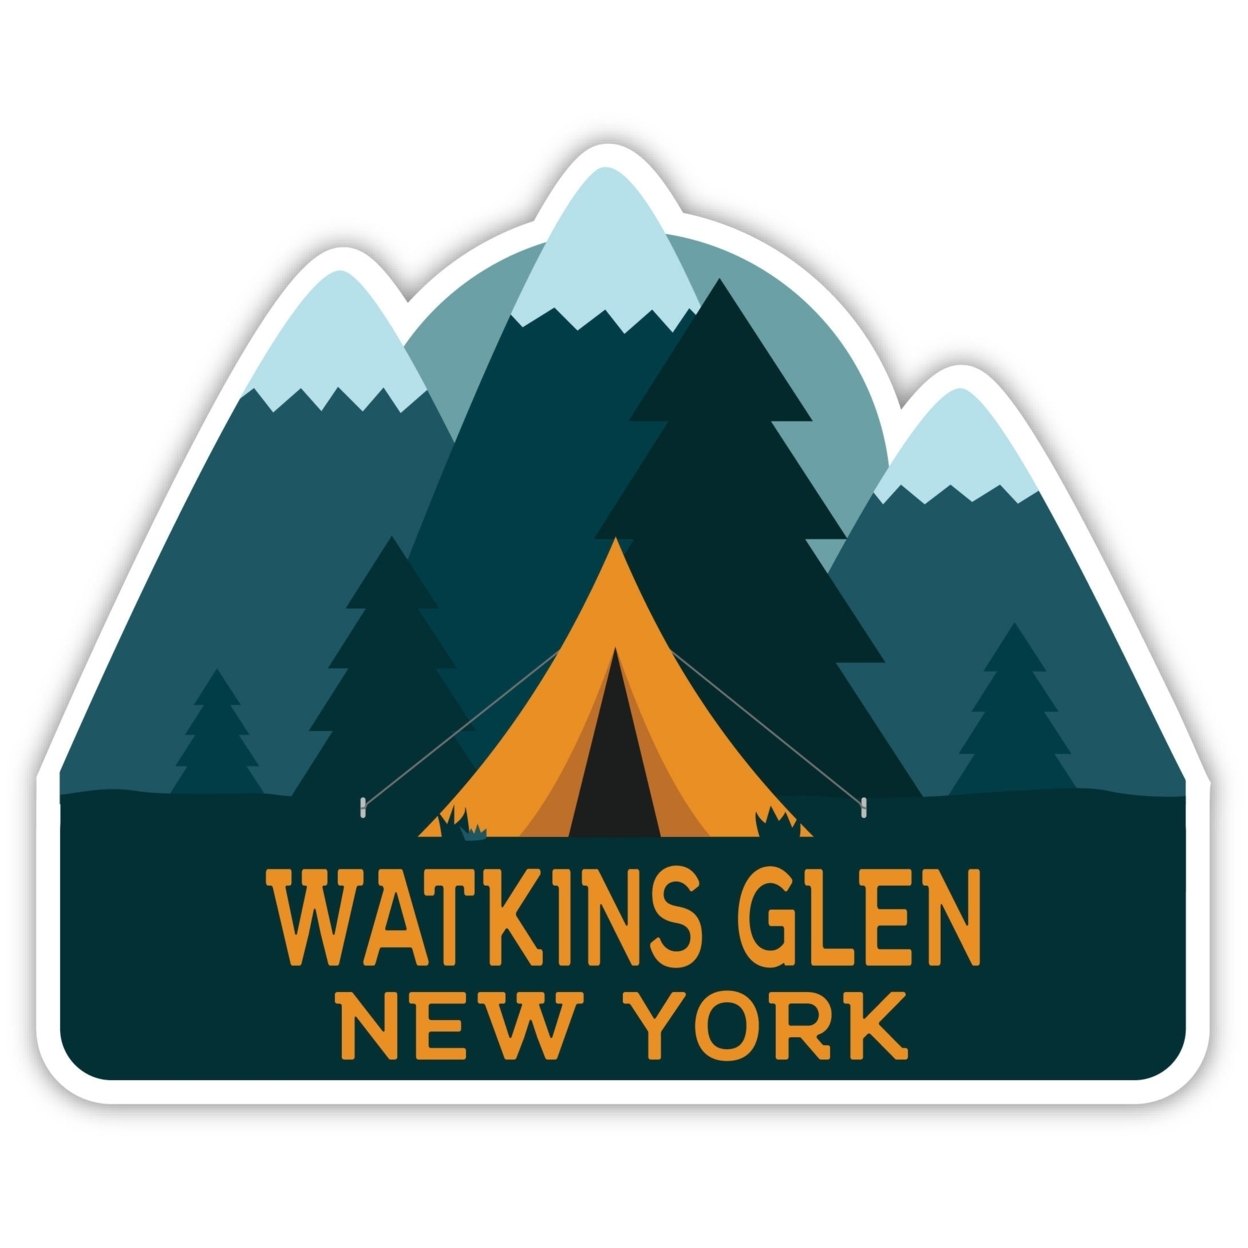 Watkins Glen New York Souvenir Decorative Stickers (Choose Theme And Size) - Single Unit, 4-Inch, Camp Life